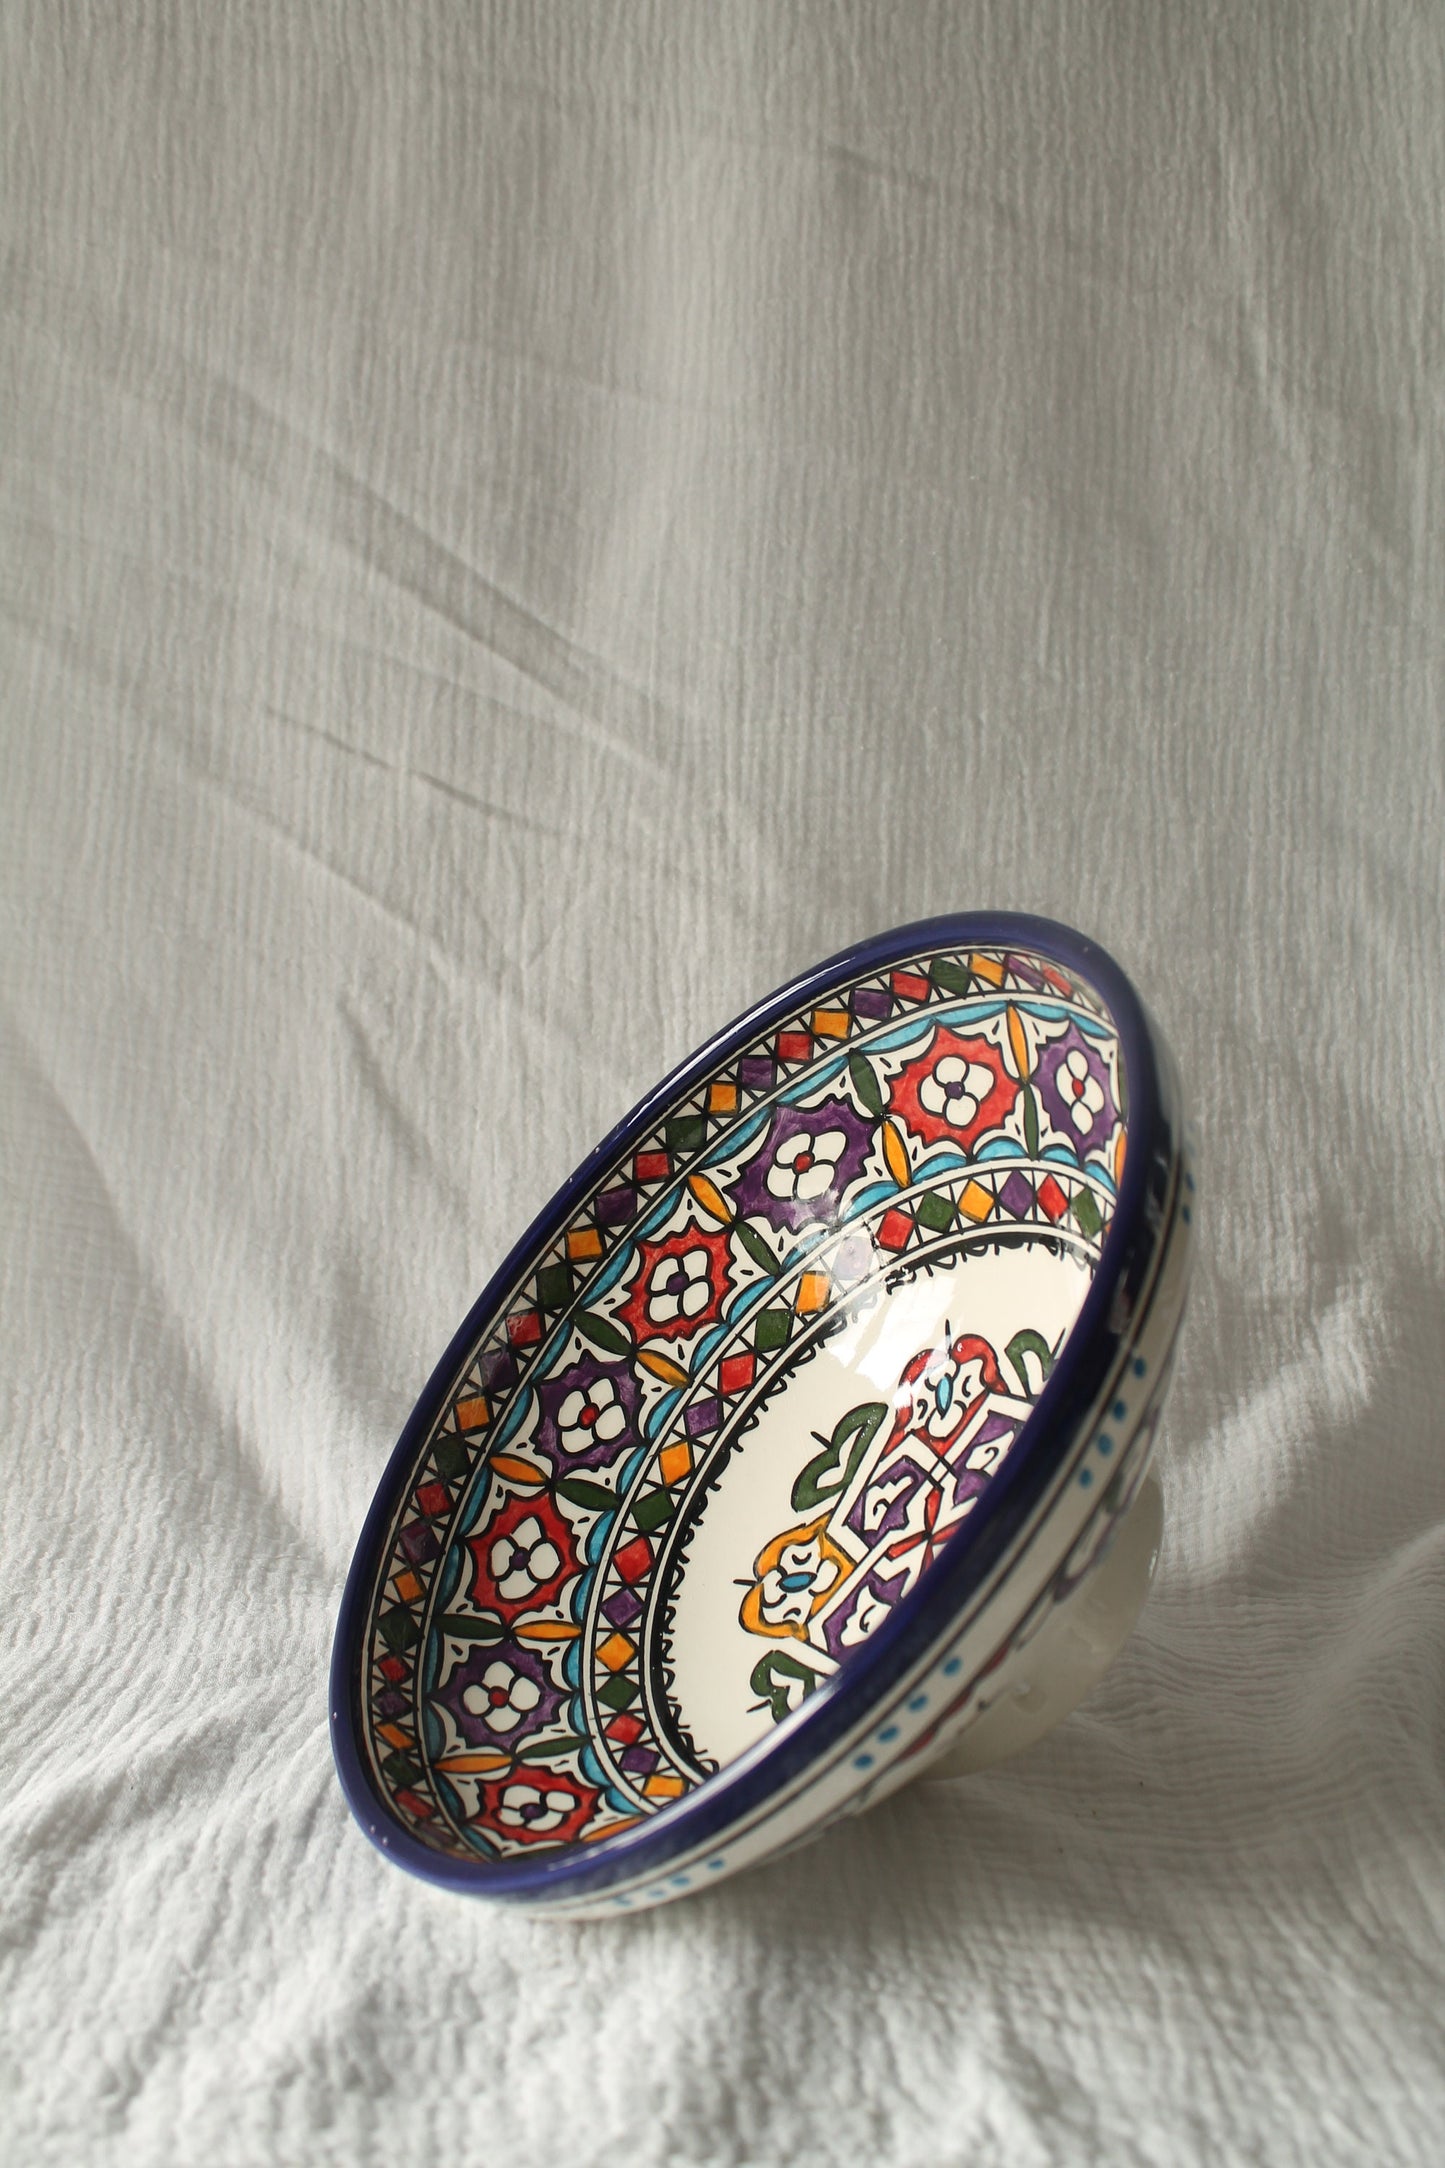 Big Ceramic Bowl, Hand painted ceramic in Fes, Morocco